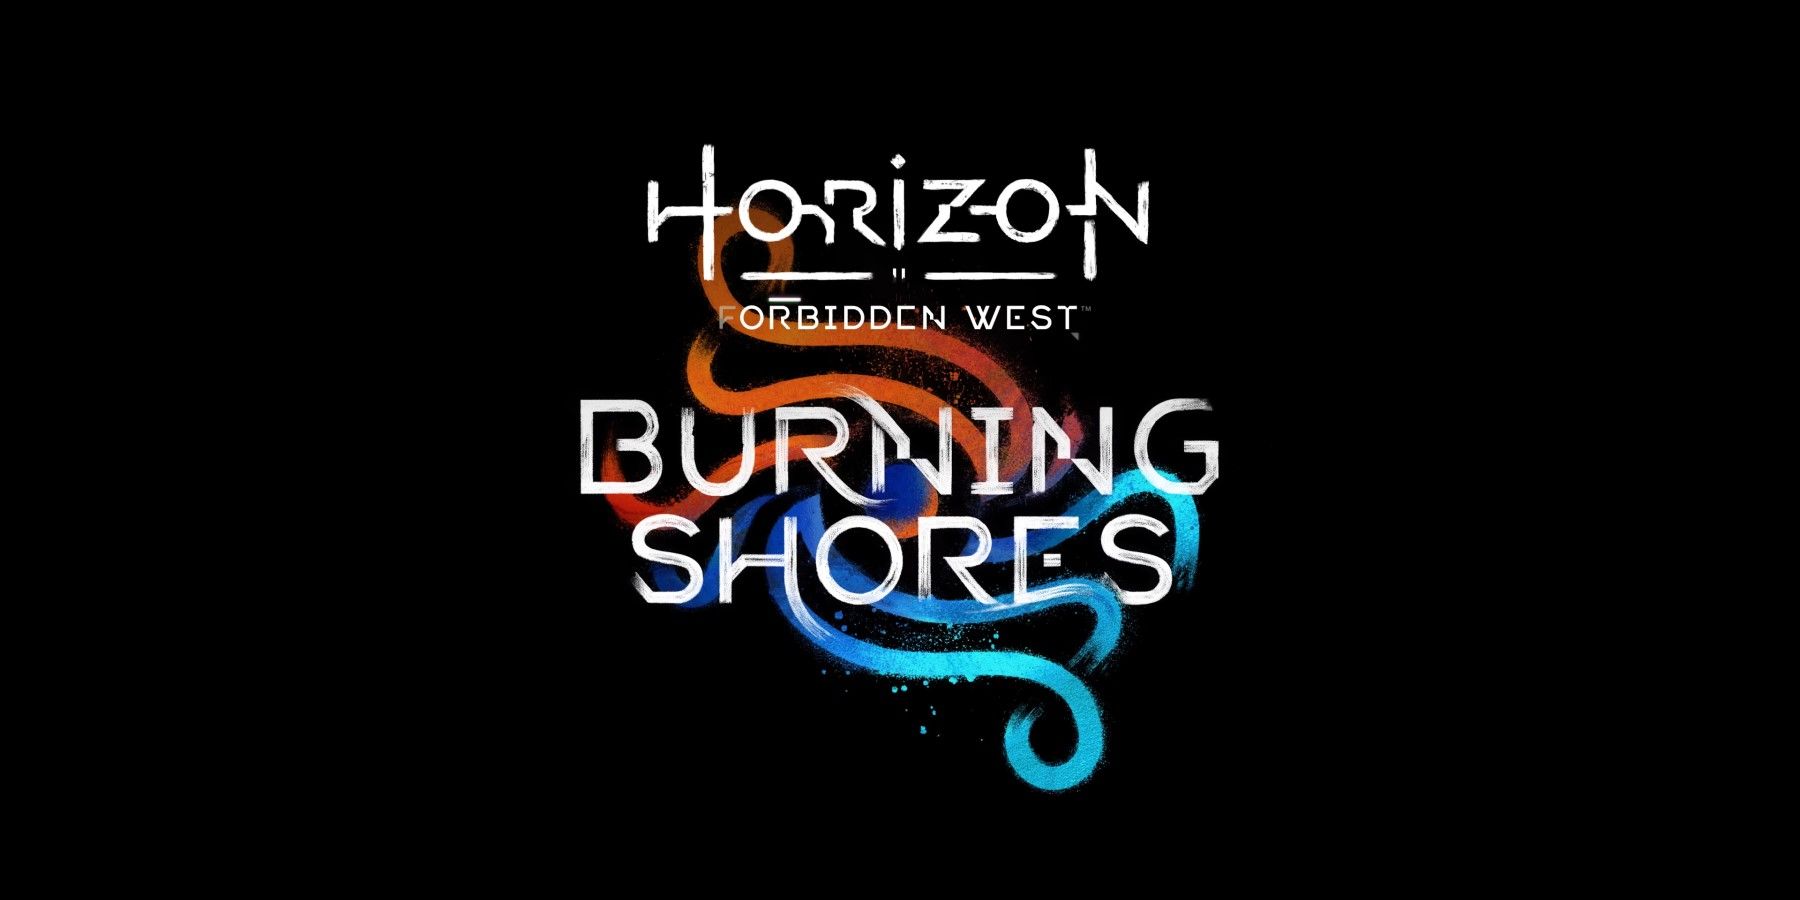 horizon forbidden west: burning shores new weapons